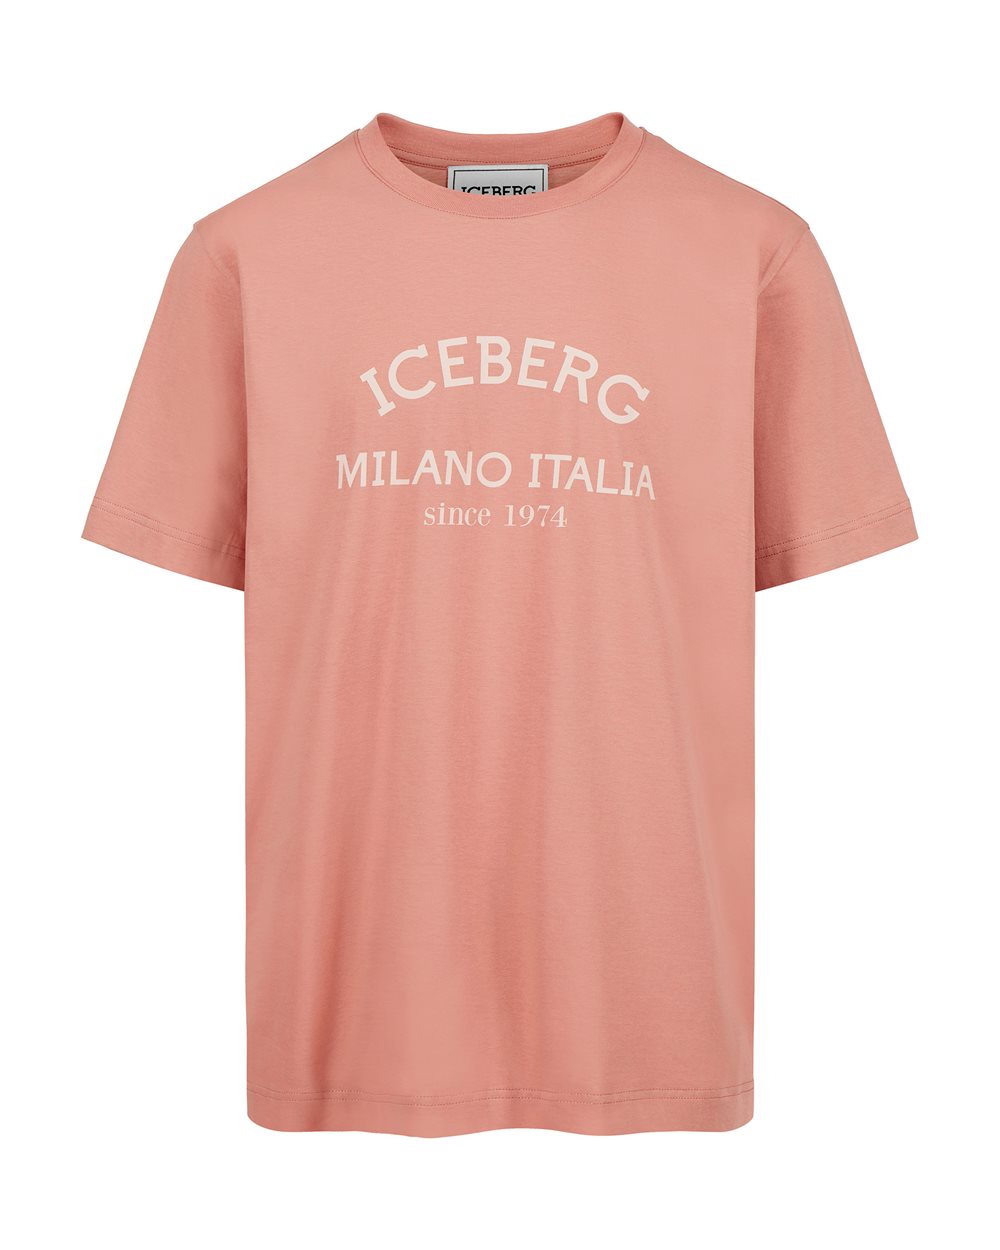 T-shirt institutional logo - Clothing | Iceberg - Official Website